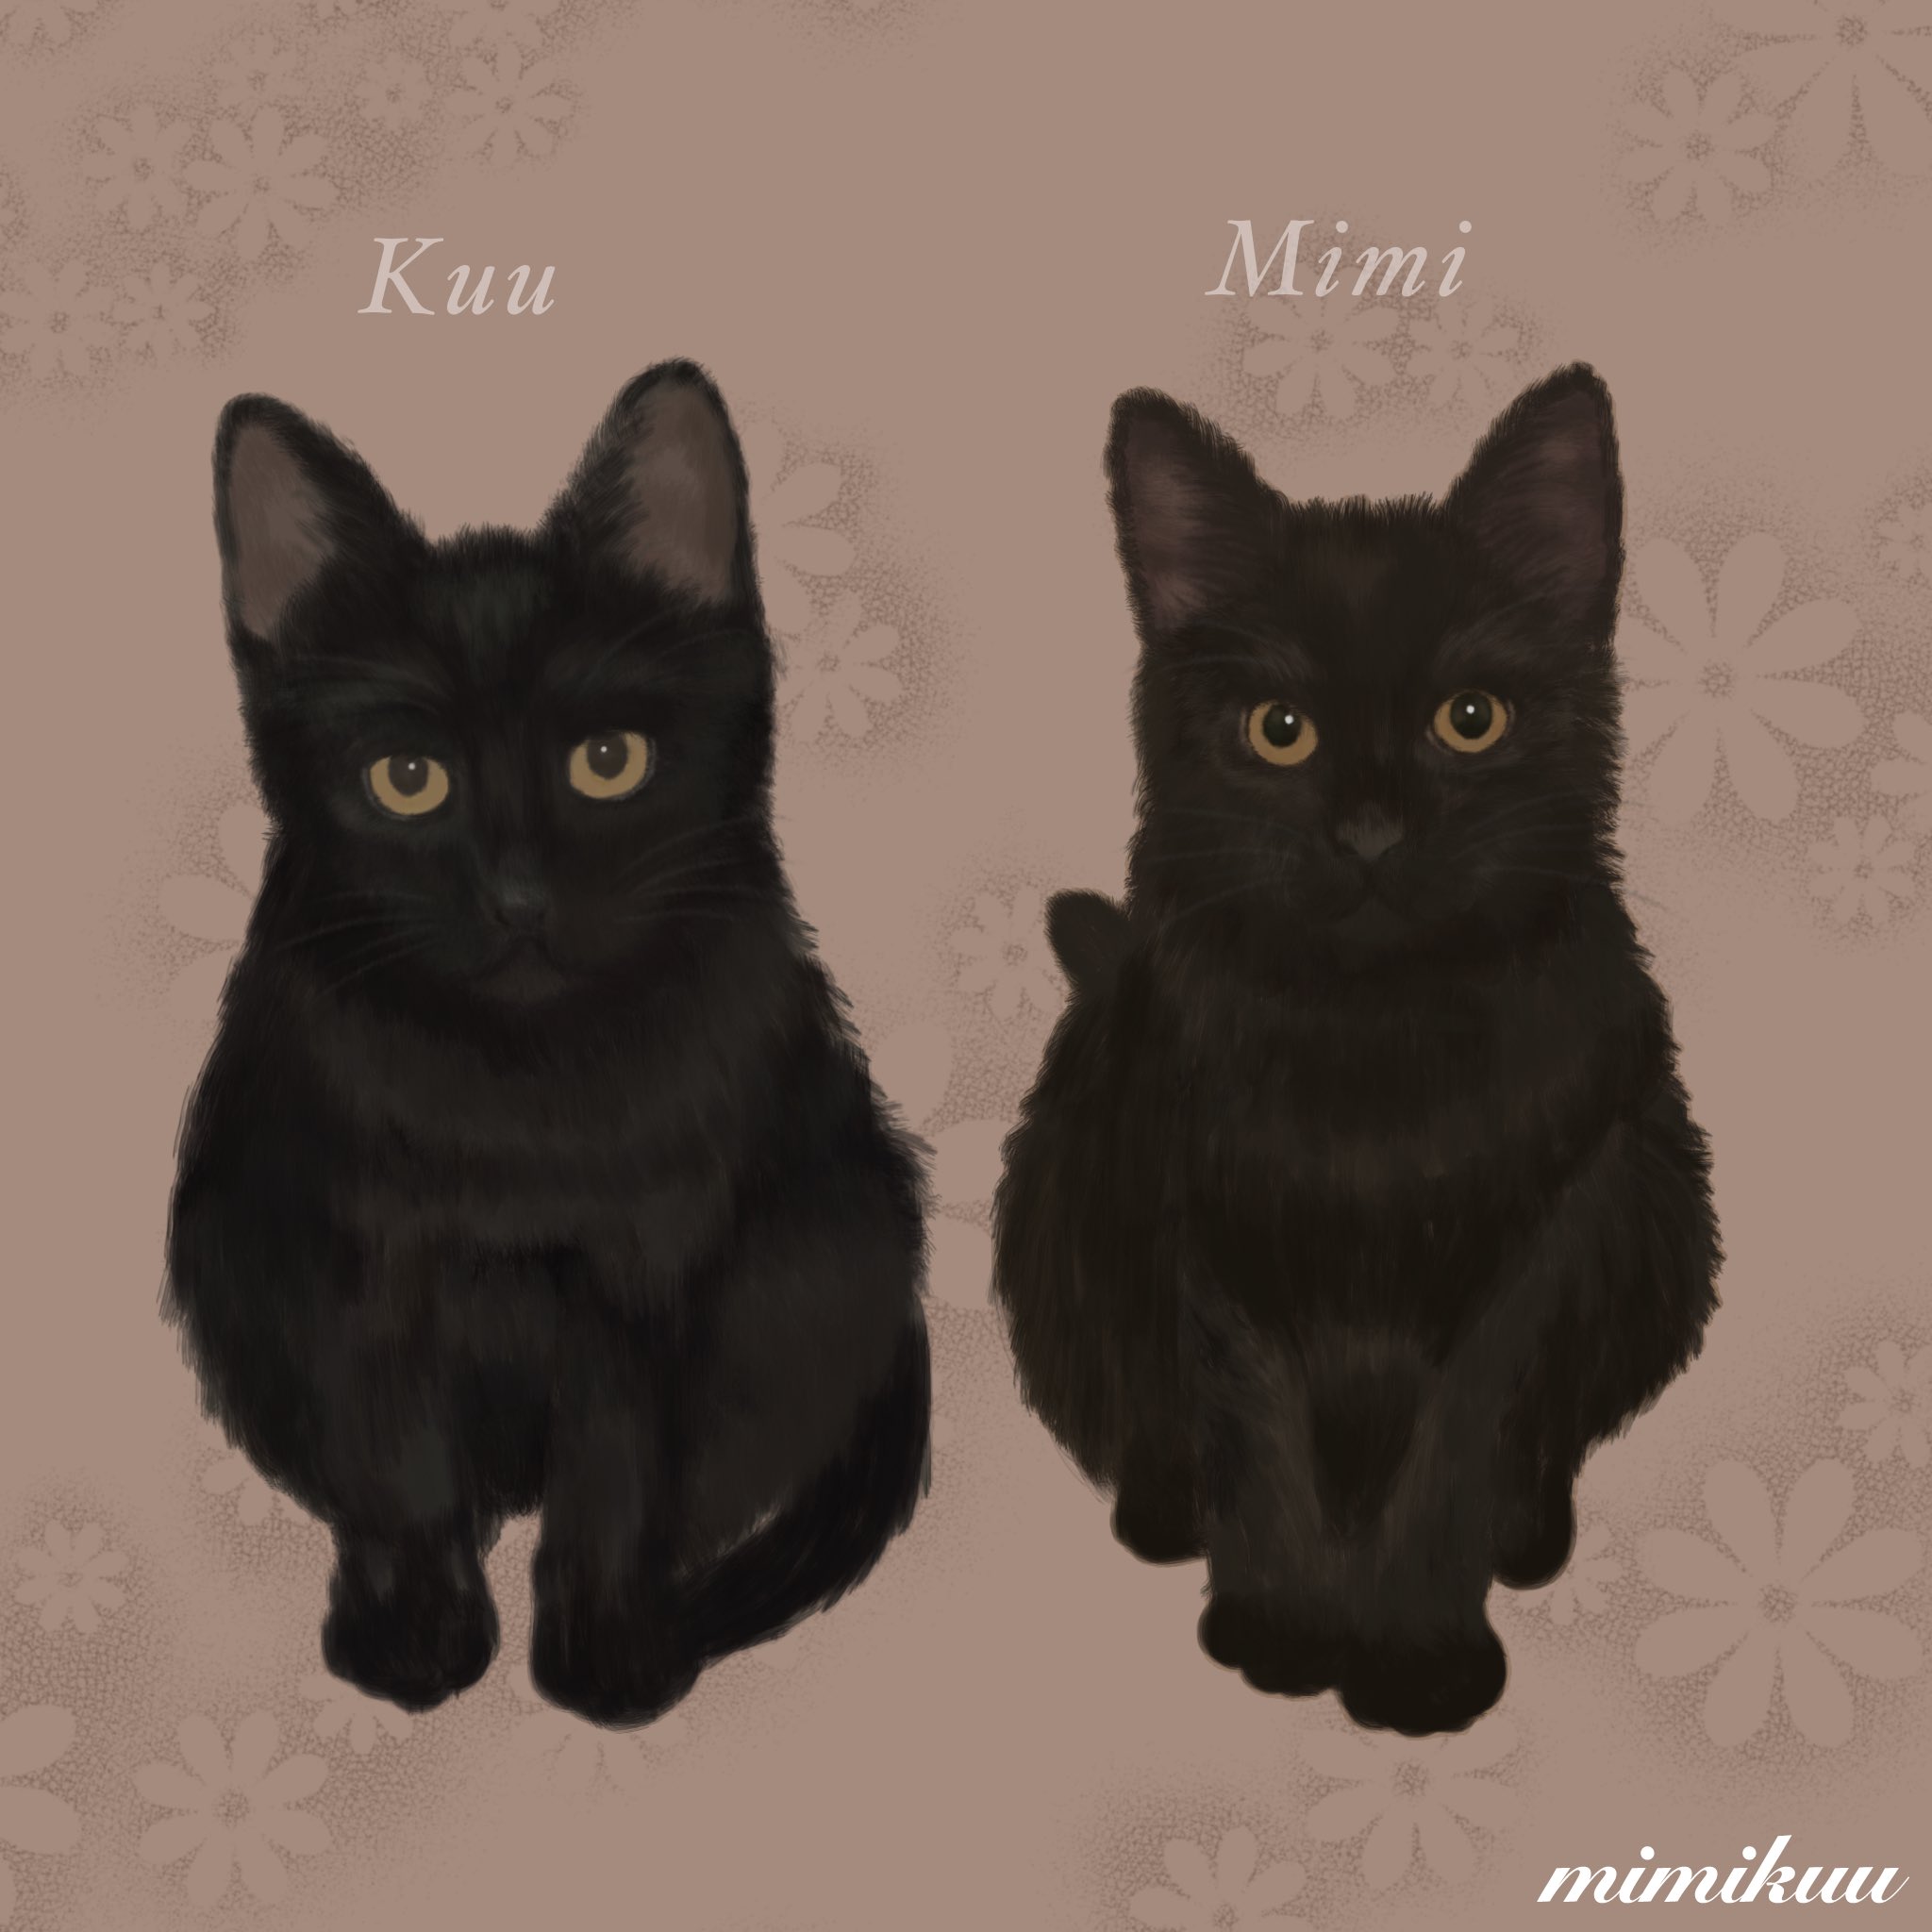 Follow 双子の黒猫 ミミとクー S Mimikuucat Latest Tweets Twitter